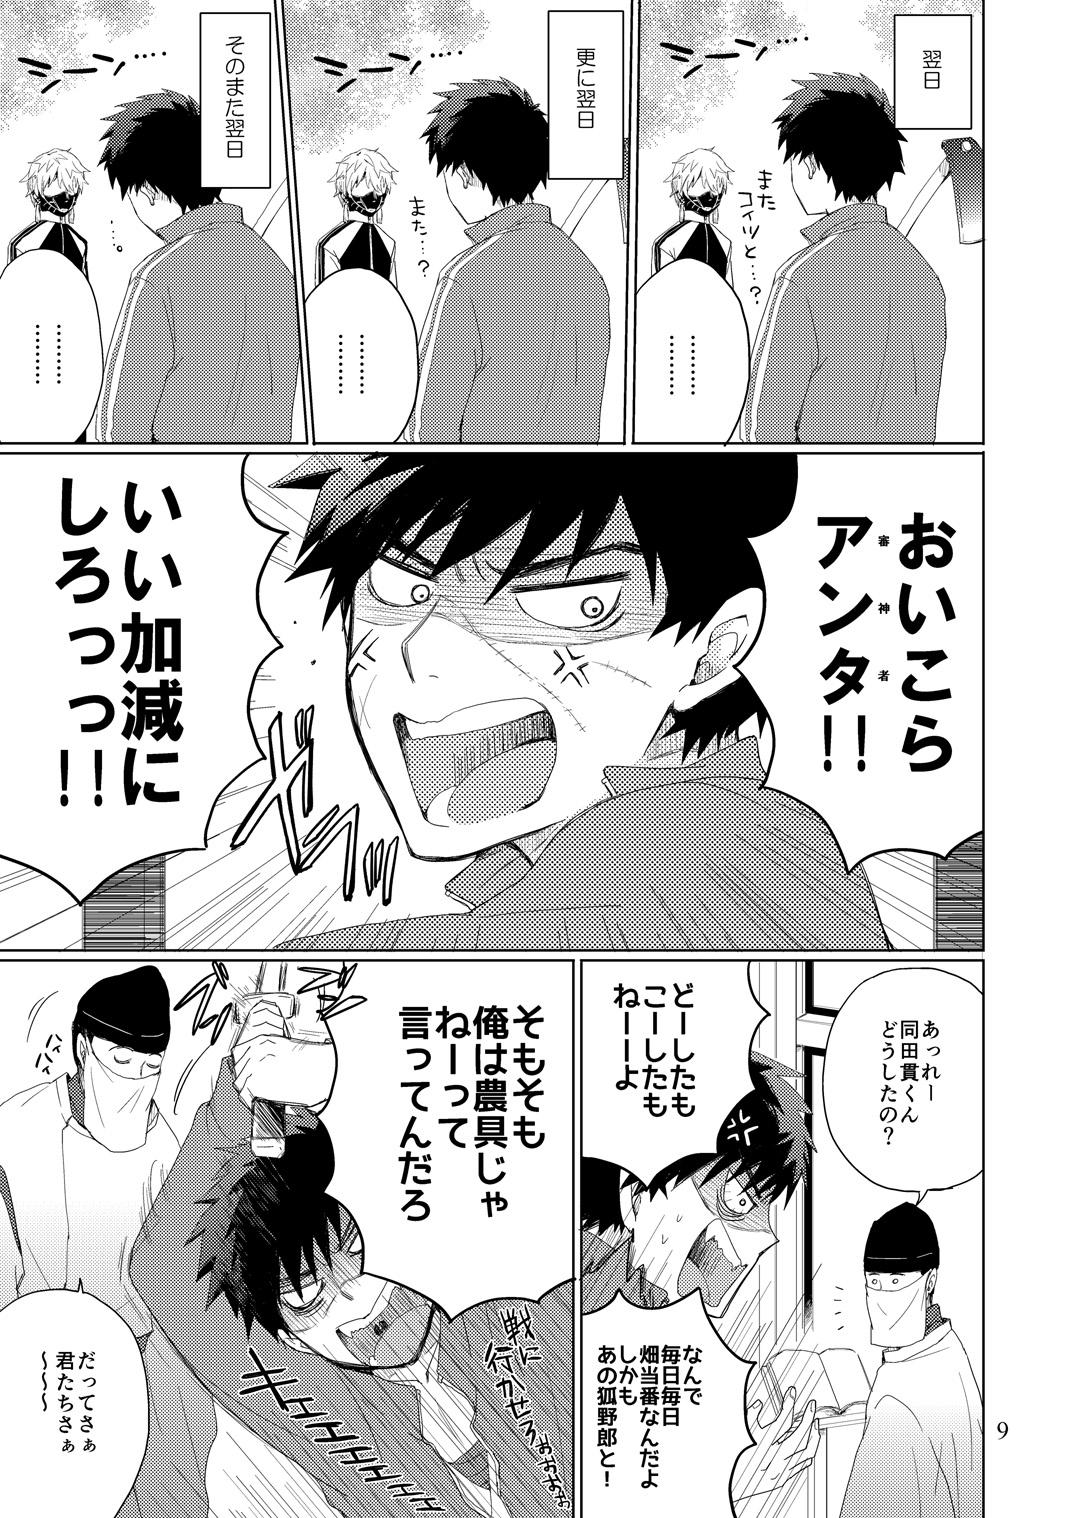 Butts Mondai no Aru Tanuki to Kitsune - Touken ranbu Couch - Page 8